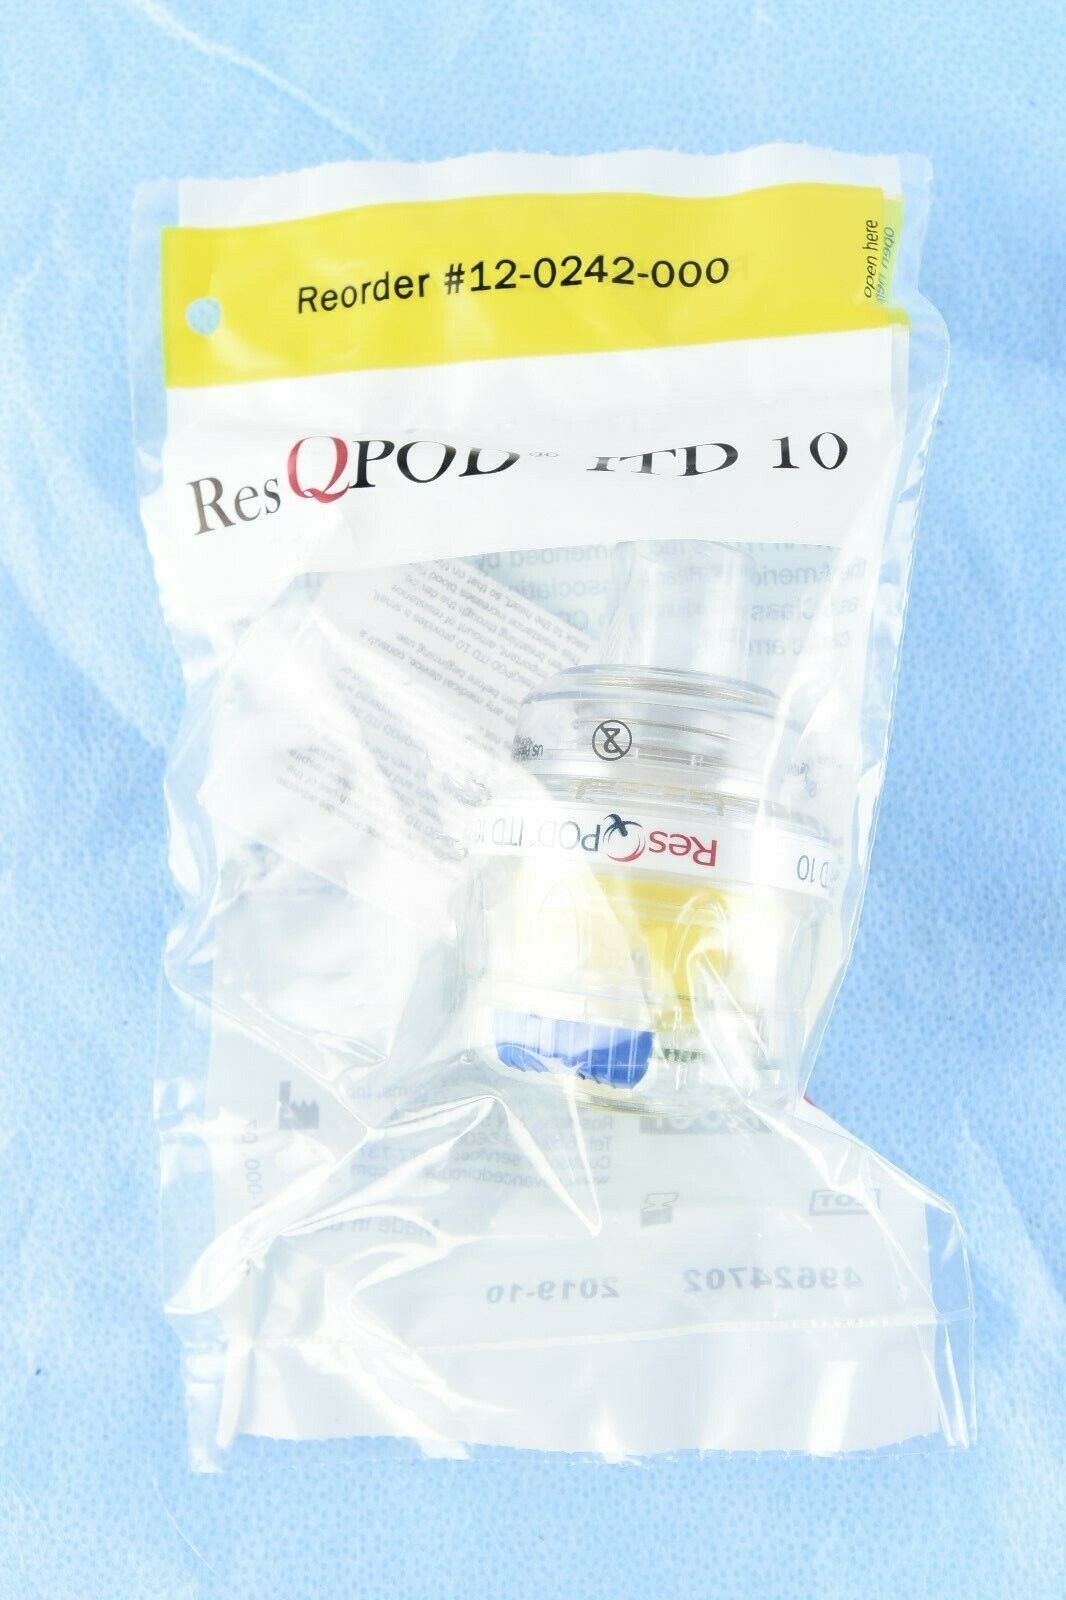  RESQPod ITD10 Impedance threshold device 12-0242-000